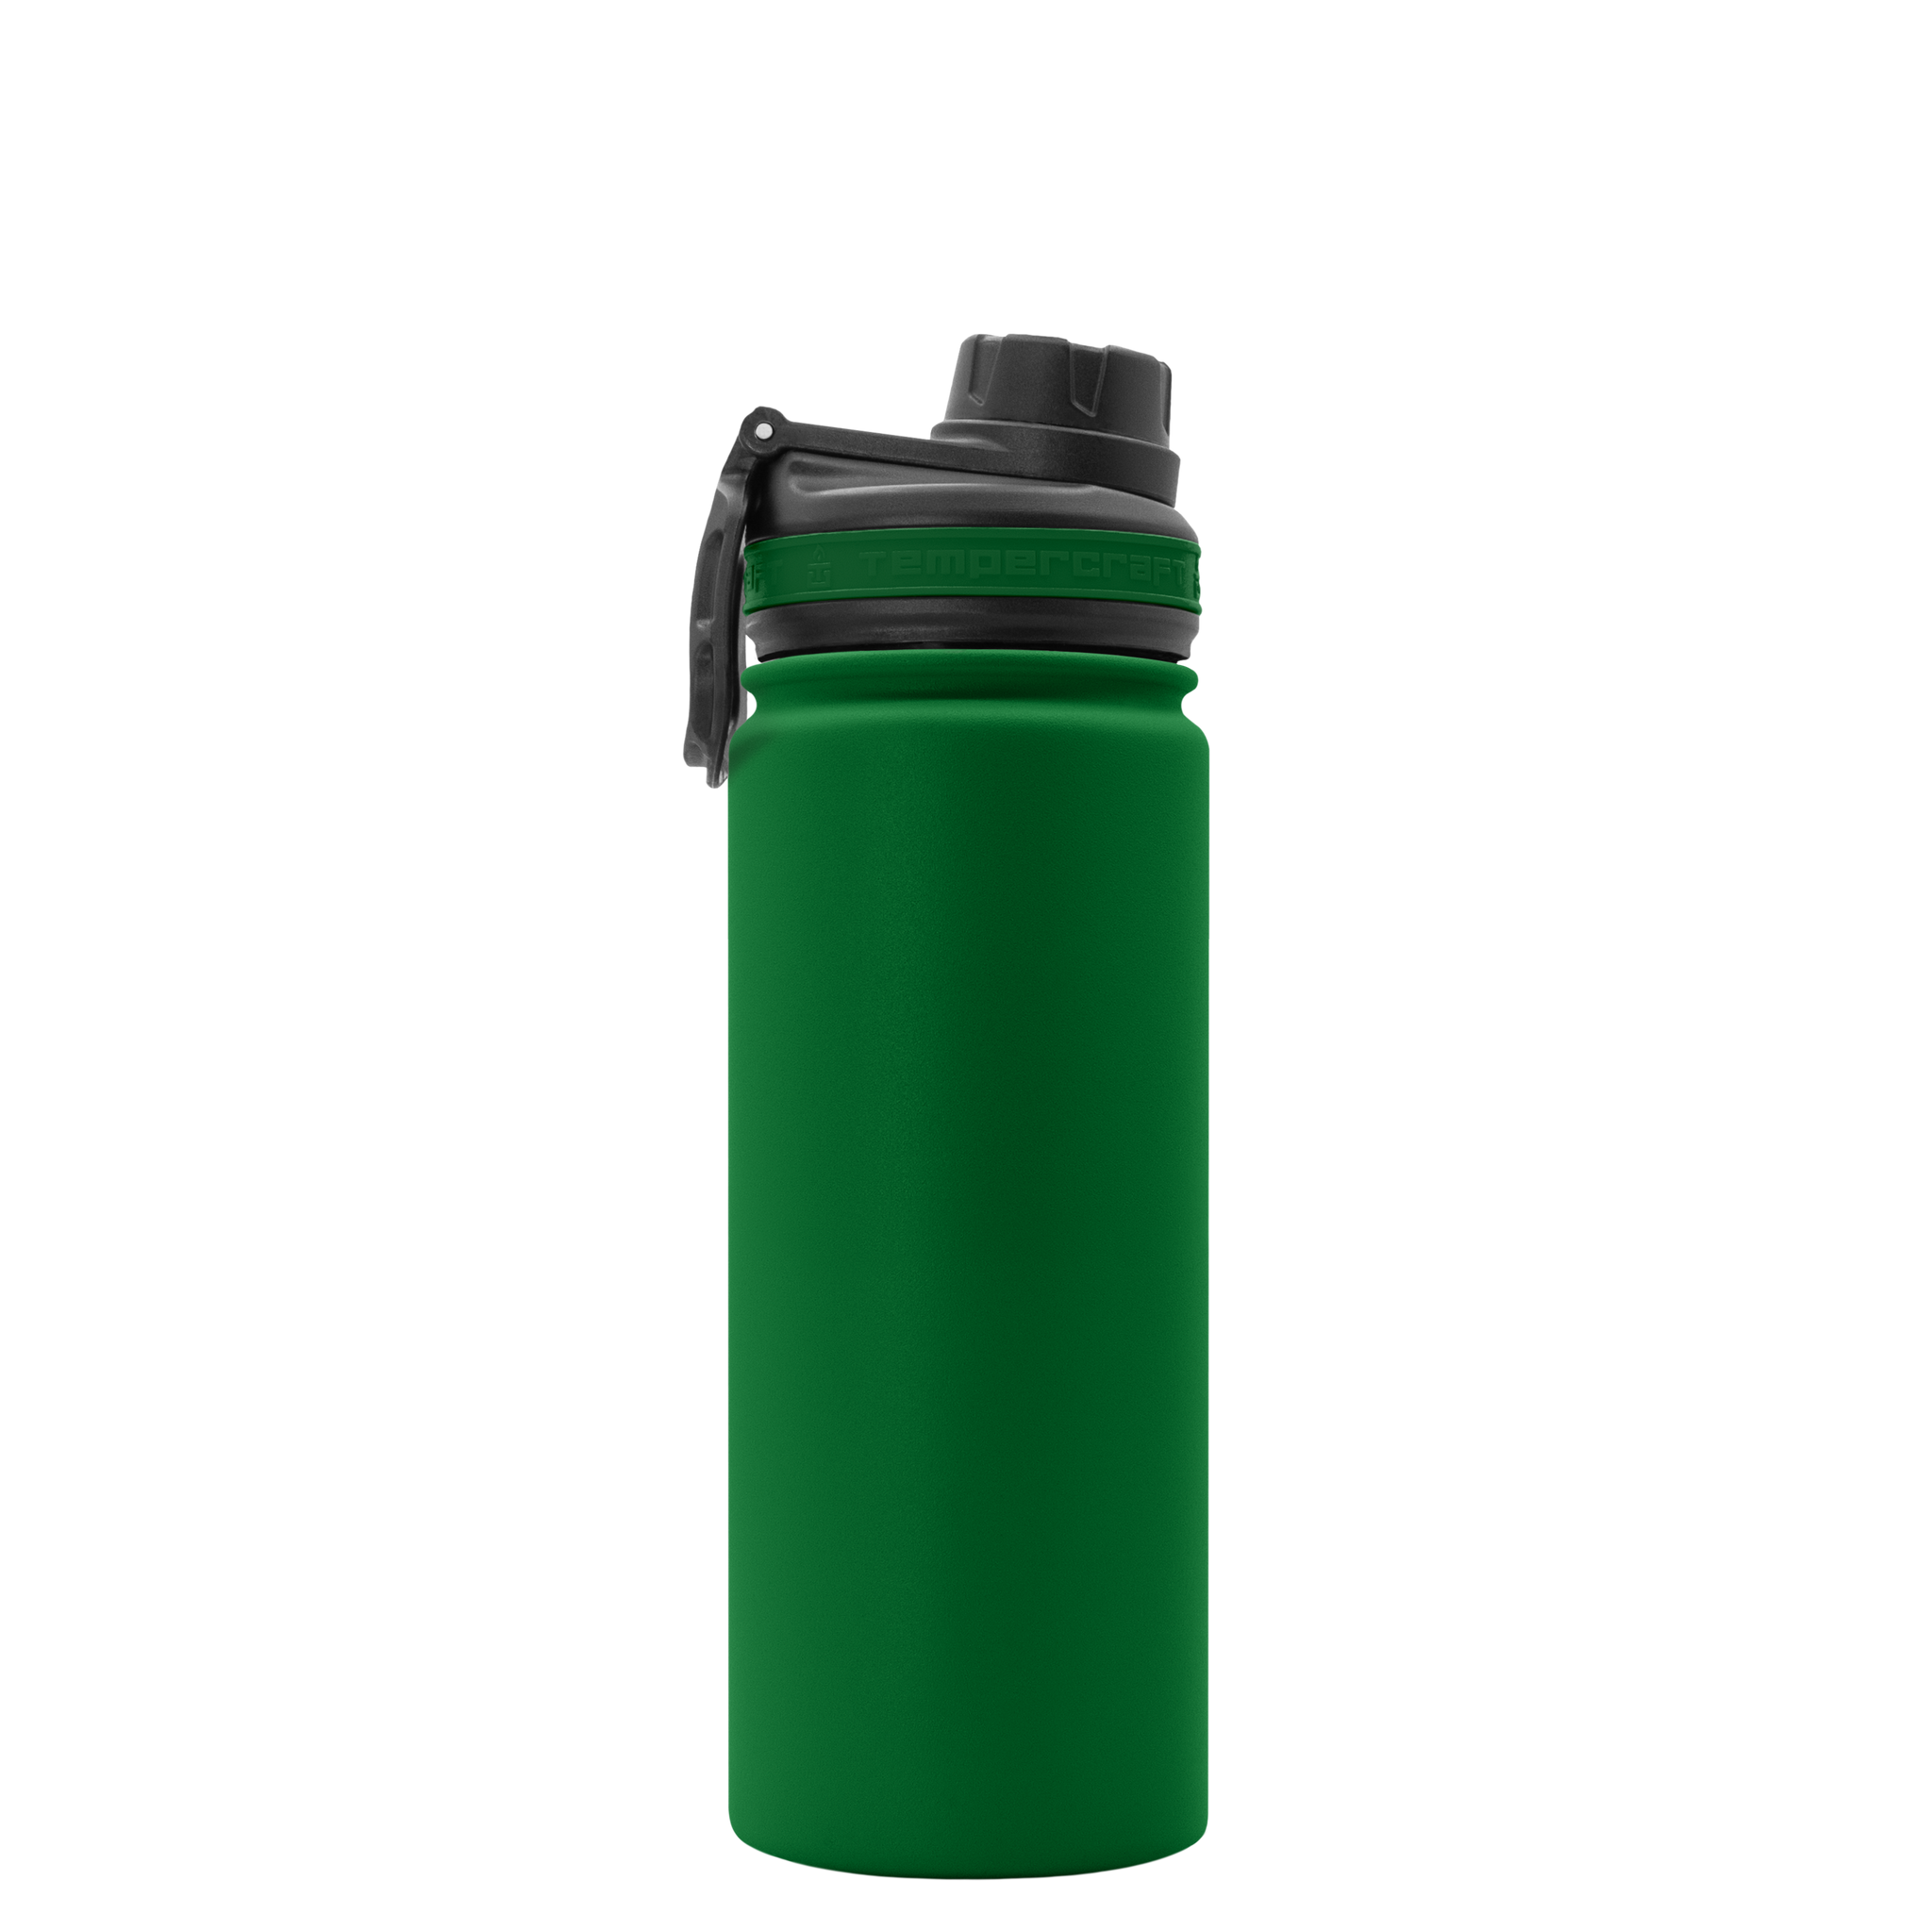 Custom Printed 18oz Transparent Water Bottles w/Flip-Straw